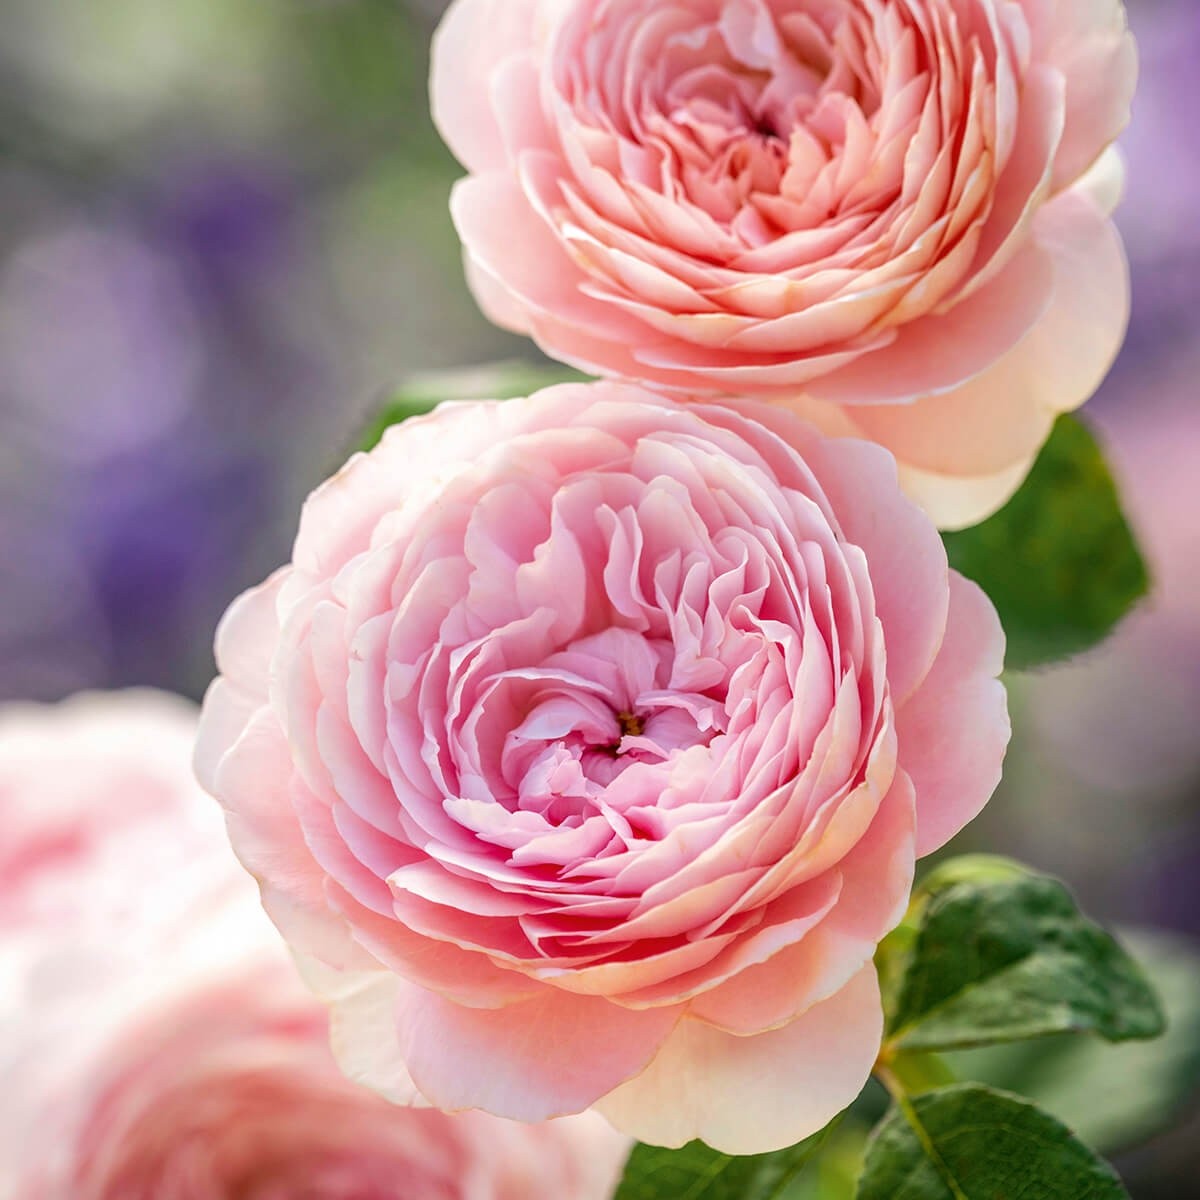 Beautiful Rose image